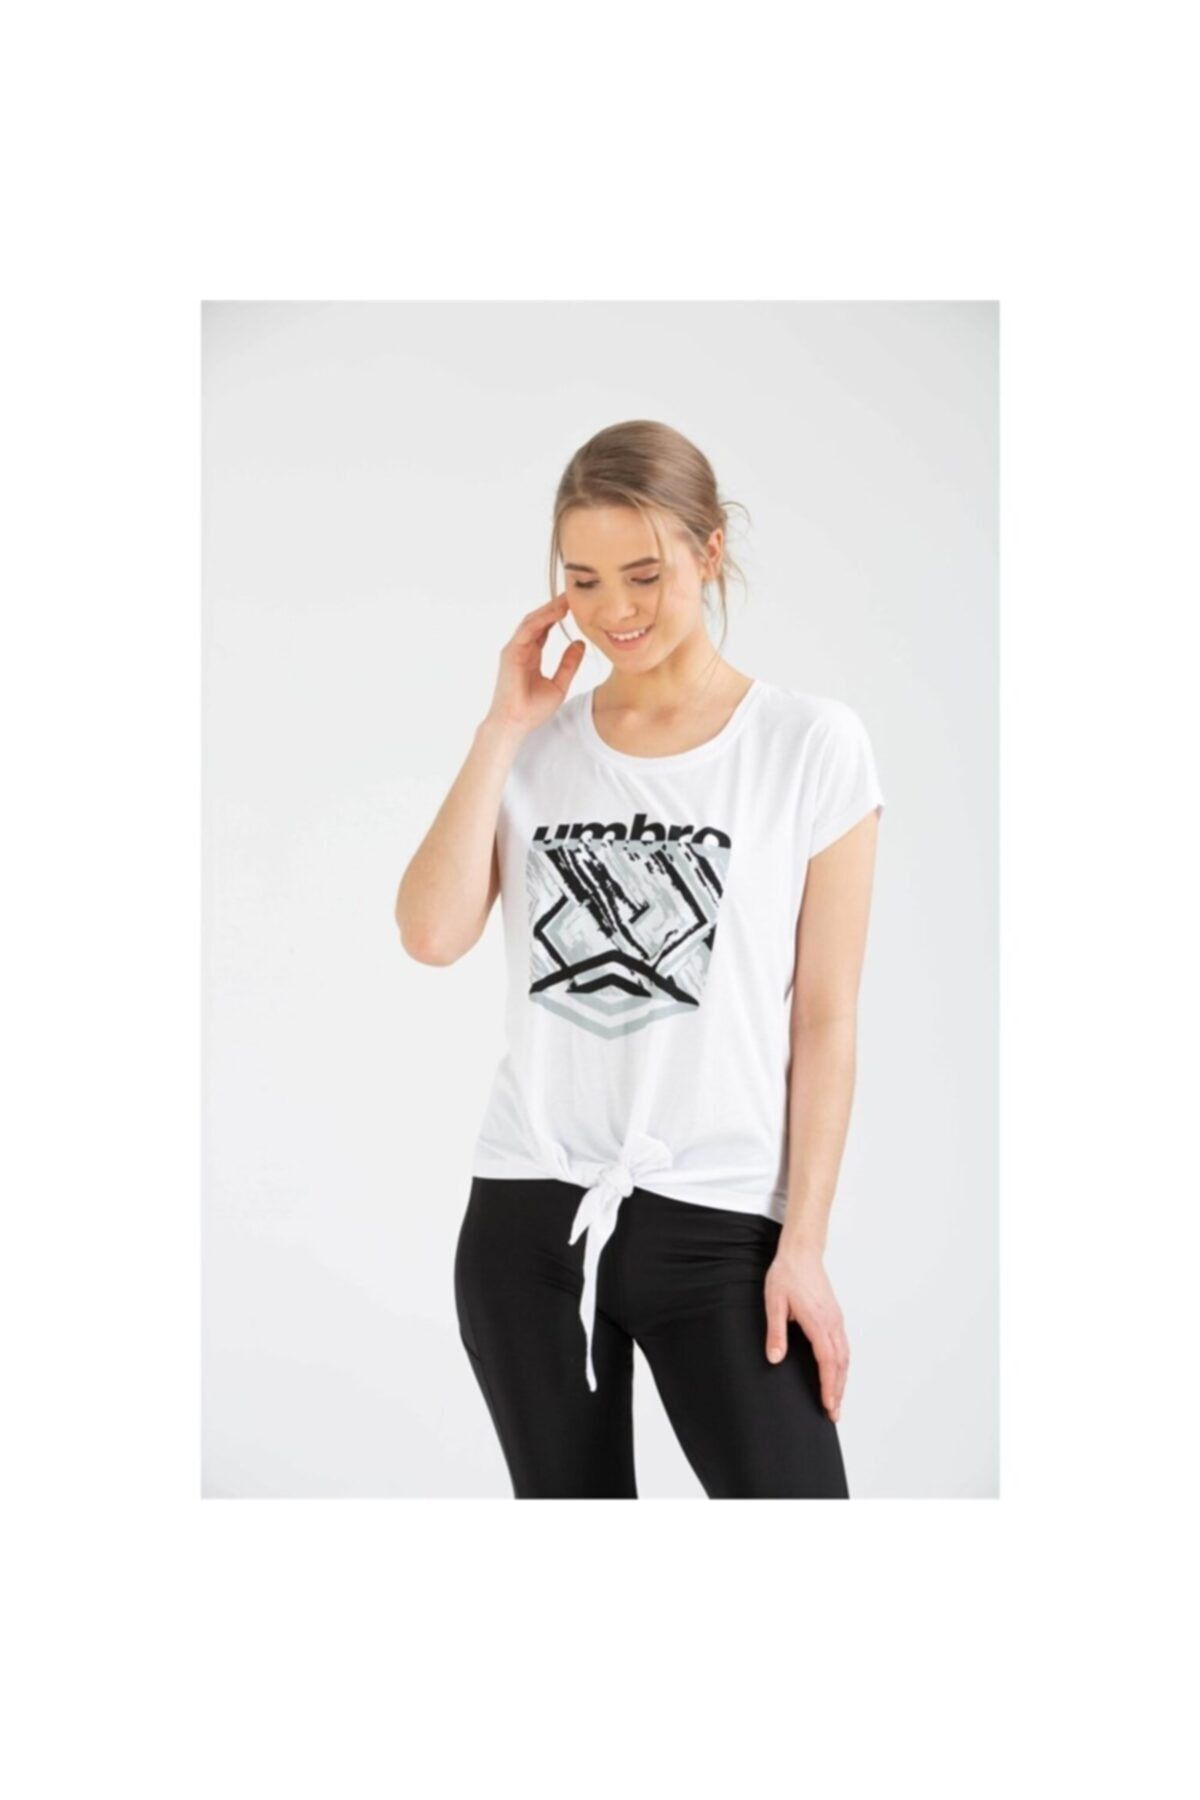 Umbro Kadın Beyaz Spor T-shirt Pei T-shirt Vf-0007